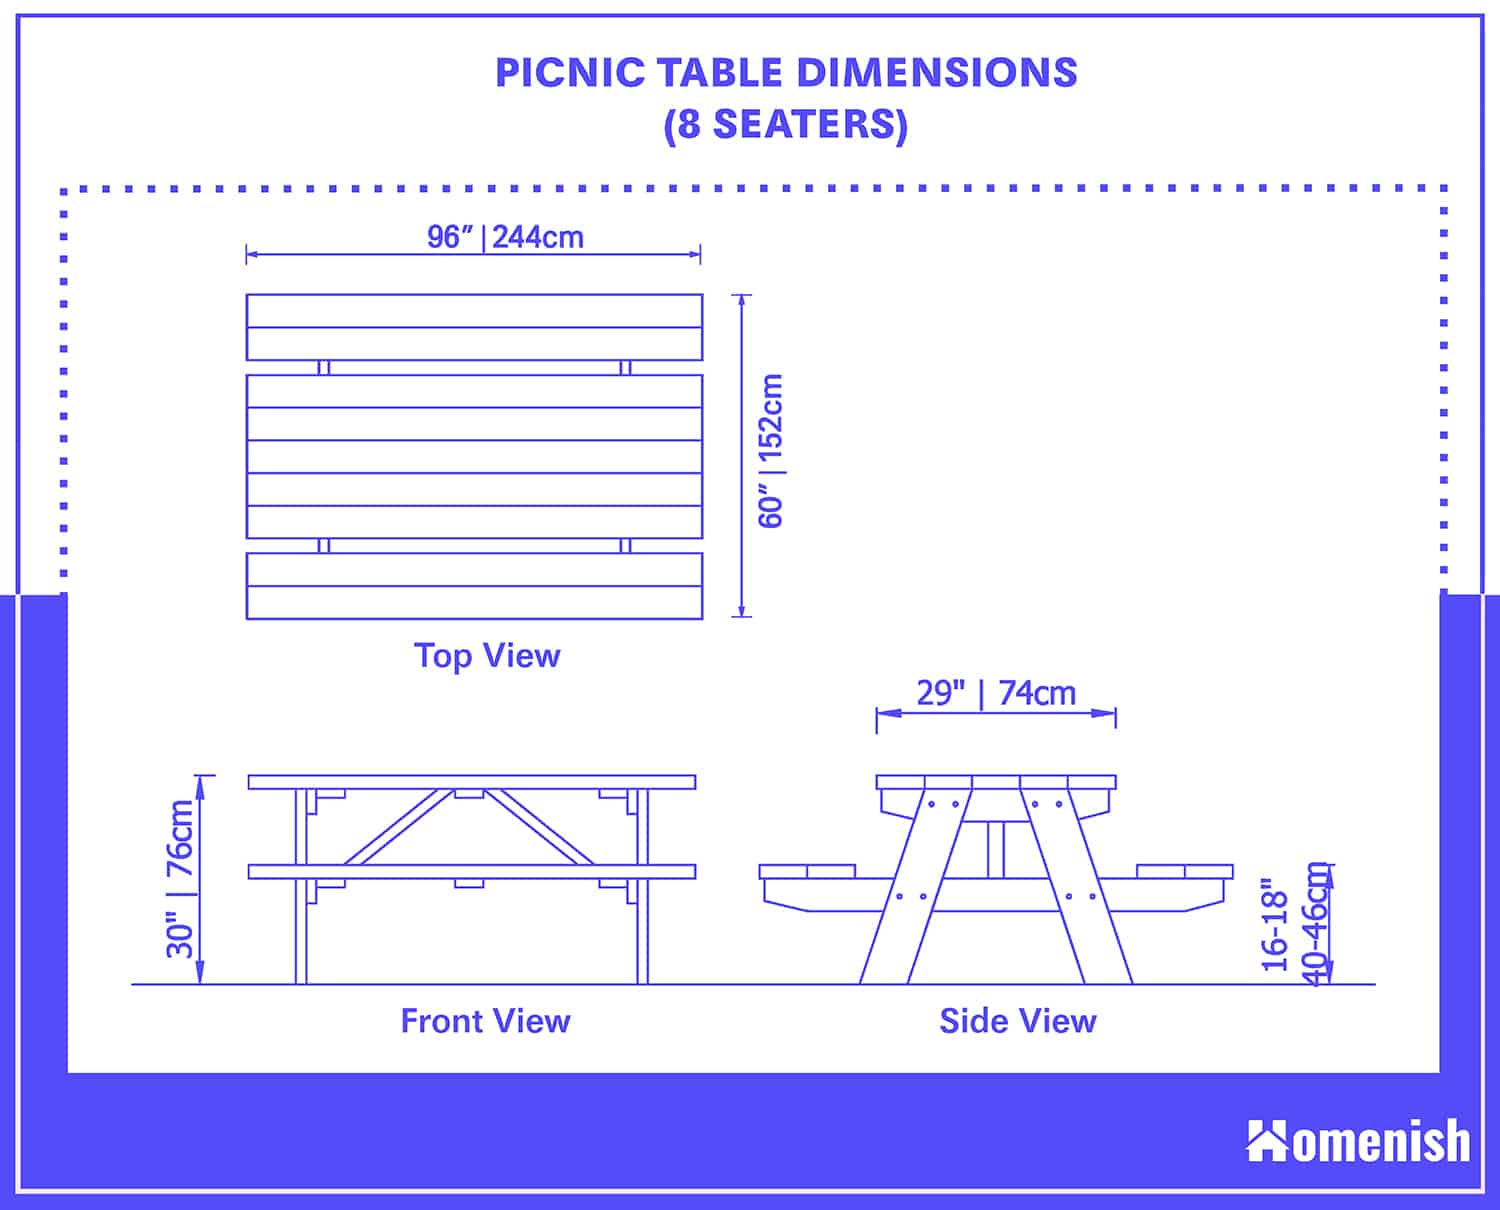 Standard Picnic Table Dimensions - 8 Seats